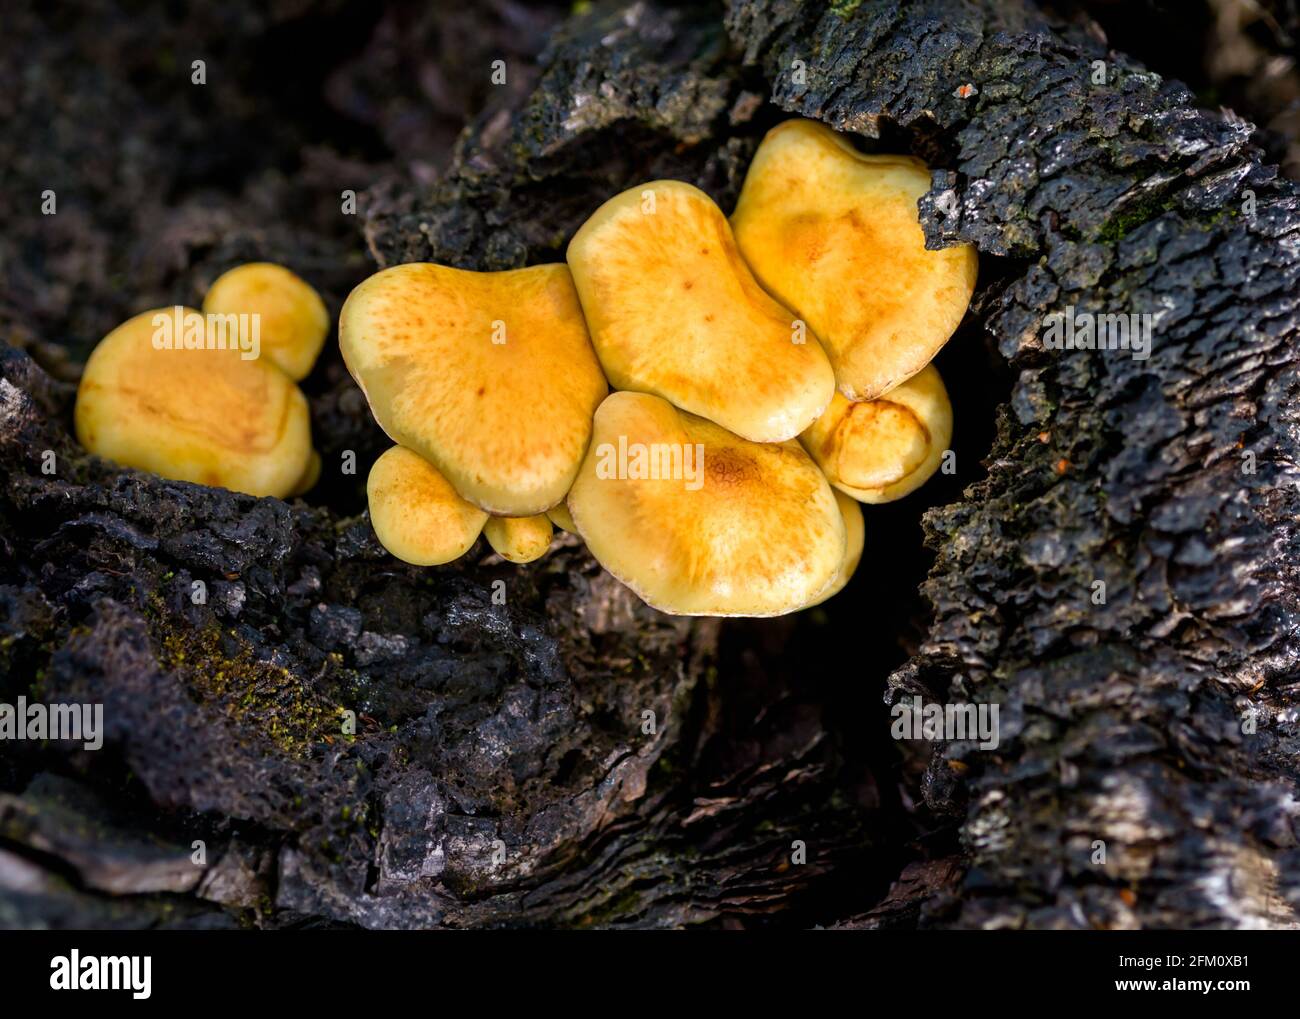 Sheathed Woodtuft Kuehneromyces mutabilis mushrooms growing on dead wood in the Highlands of Scotland Stock Photo